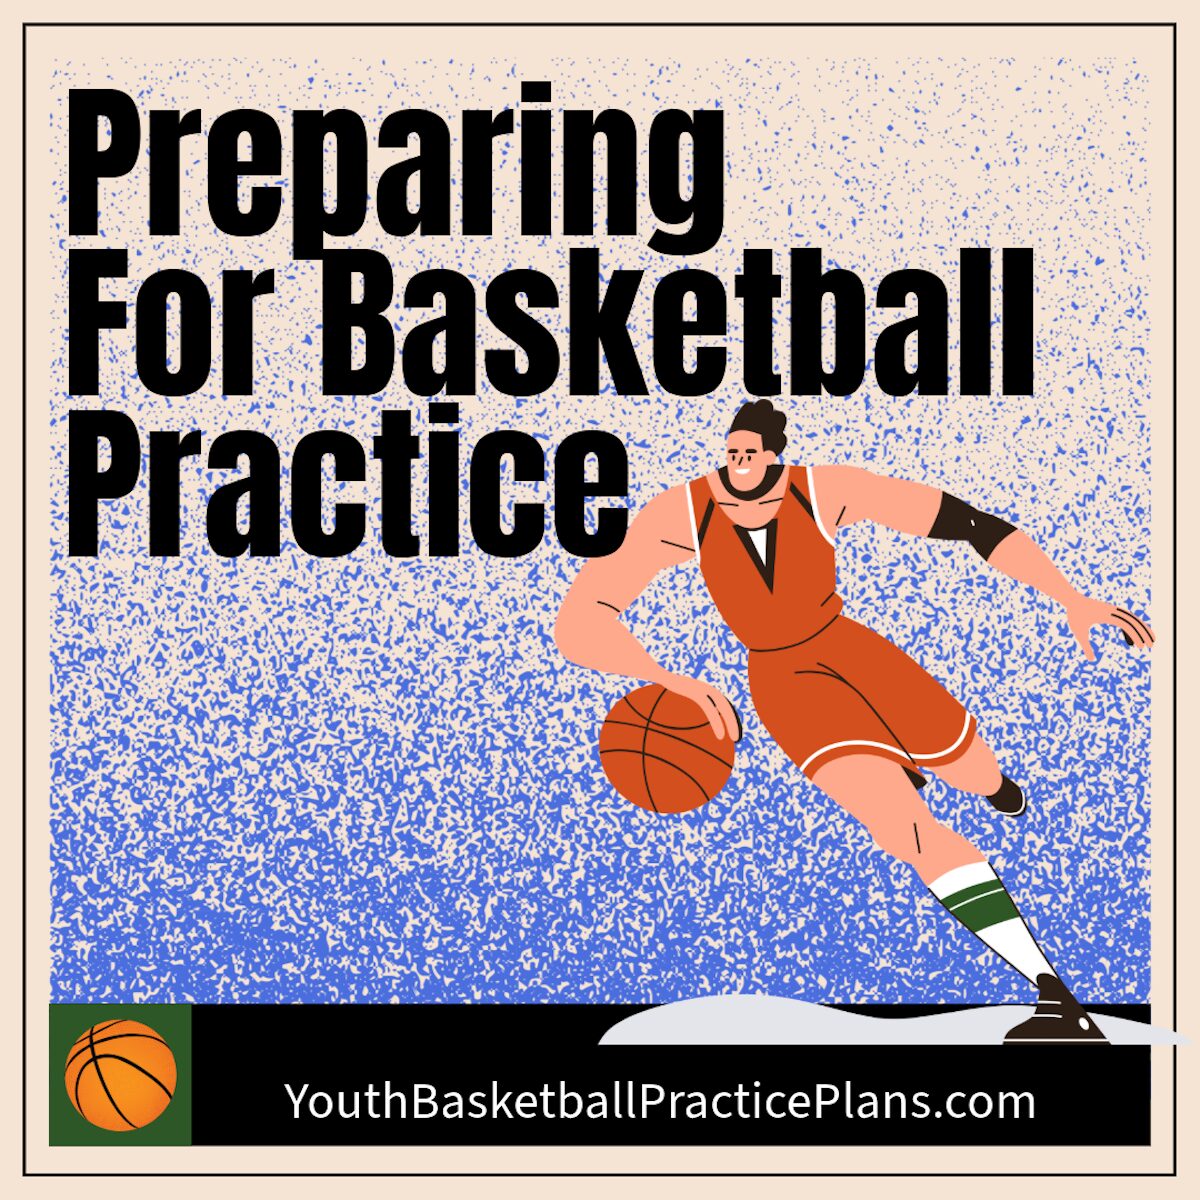 Preparing for Basketball Practice - 13 Tips.